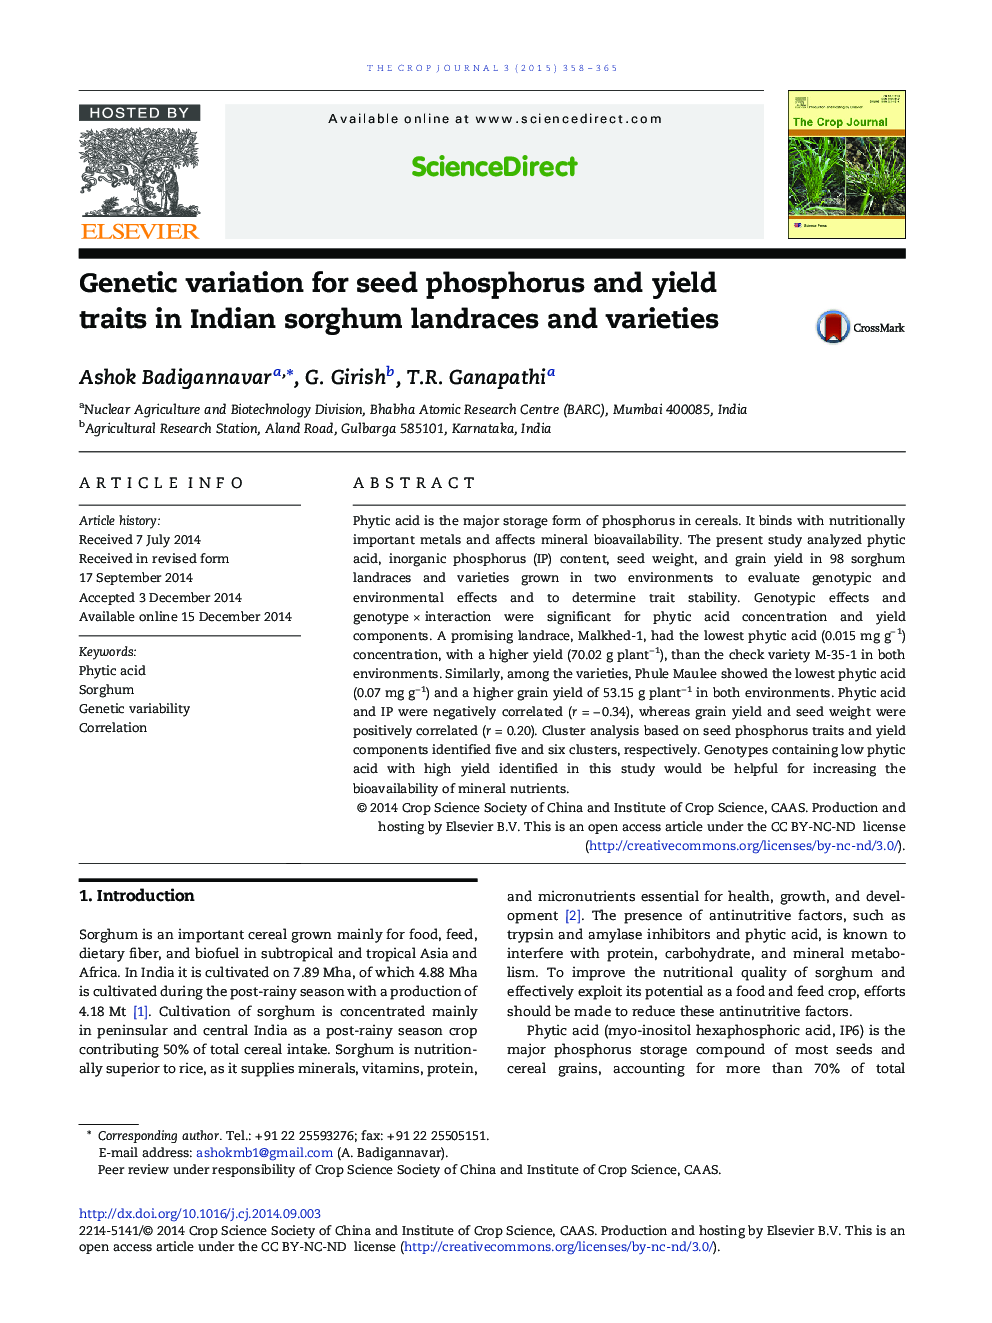 Genetic variation for seed phosphorus and yield traits in Indian sorghum landraces and varieties